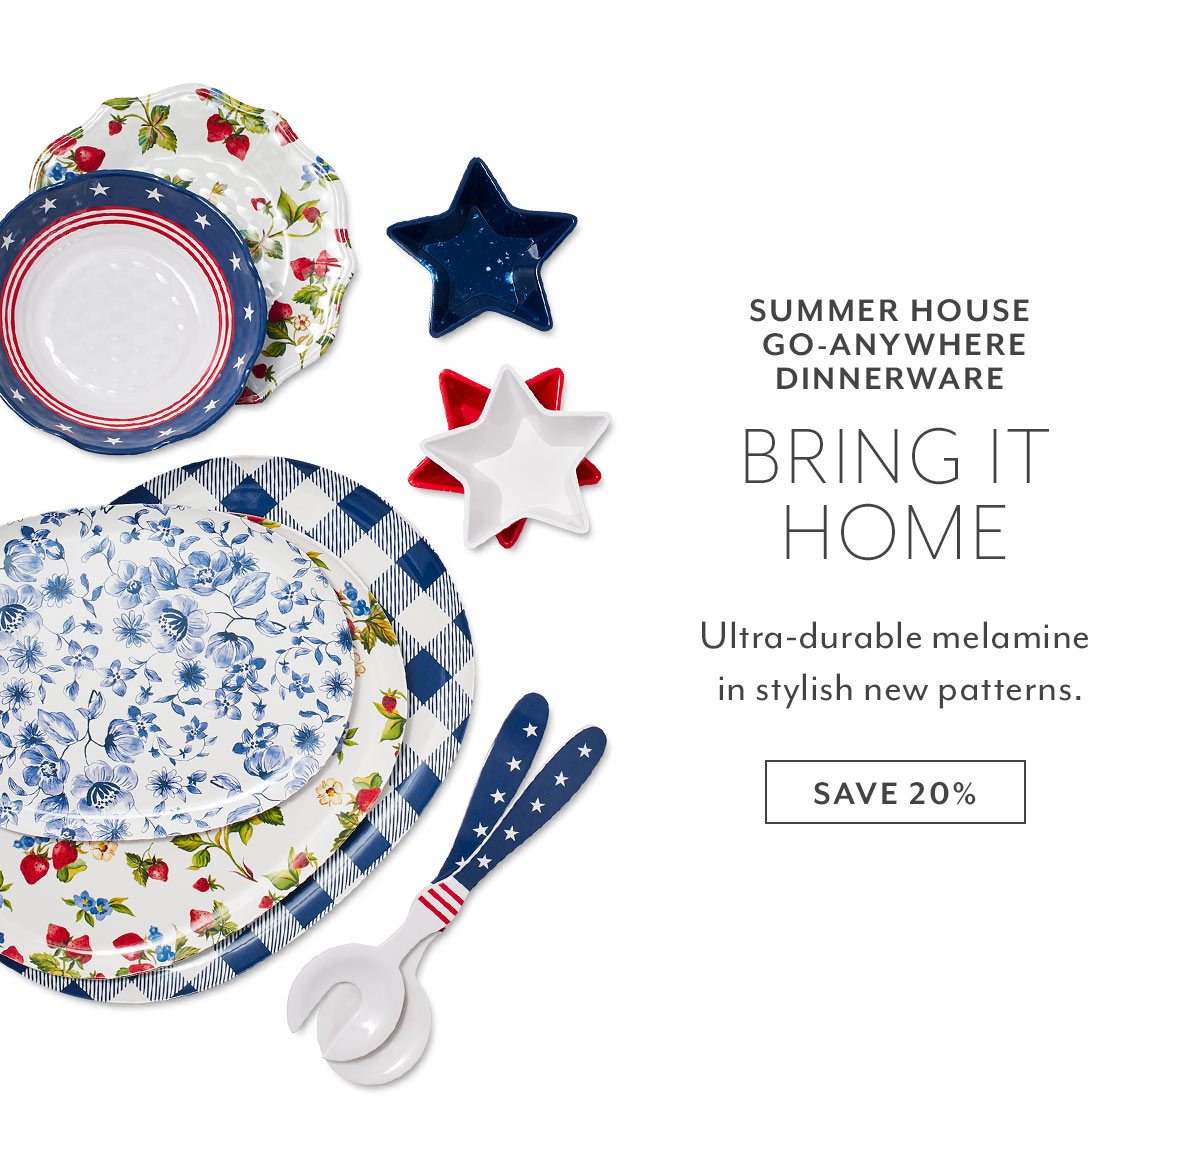 Summer House Go-Anywhere Dinnerware